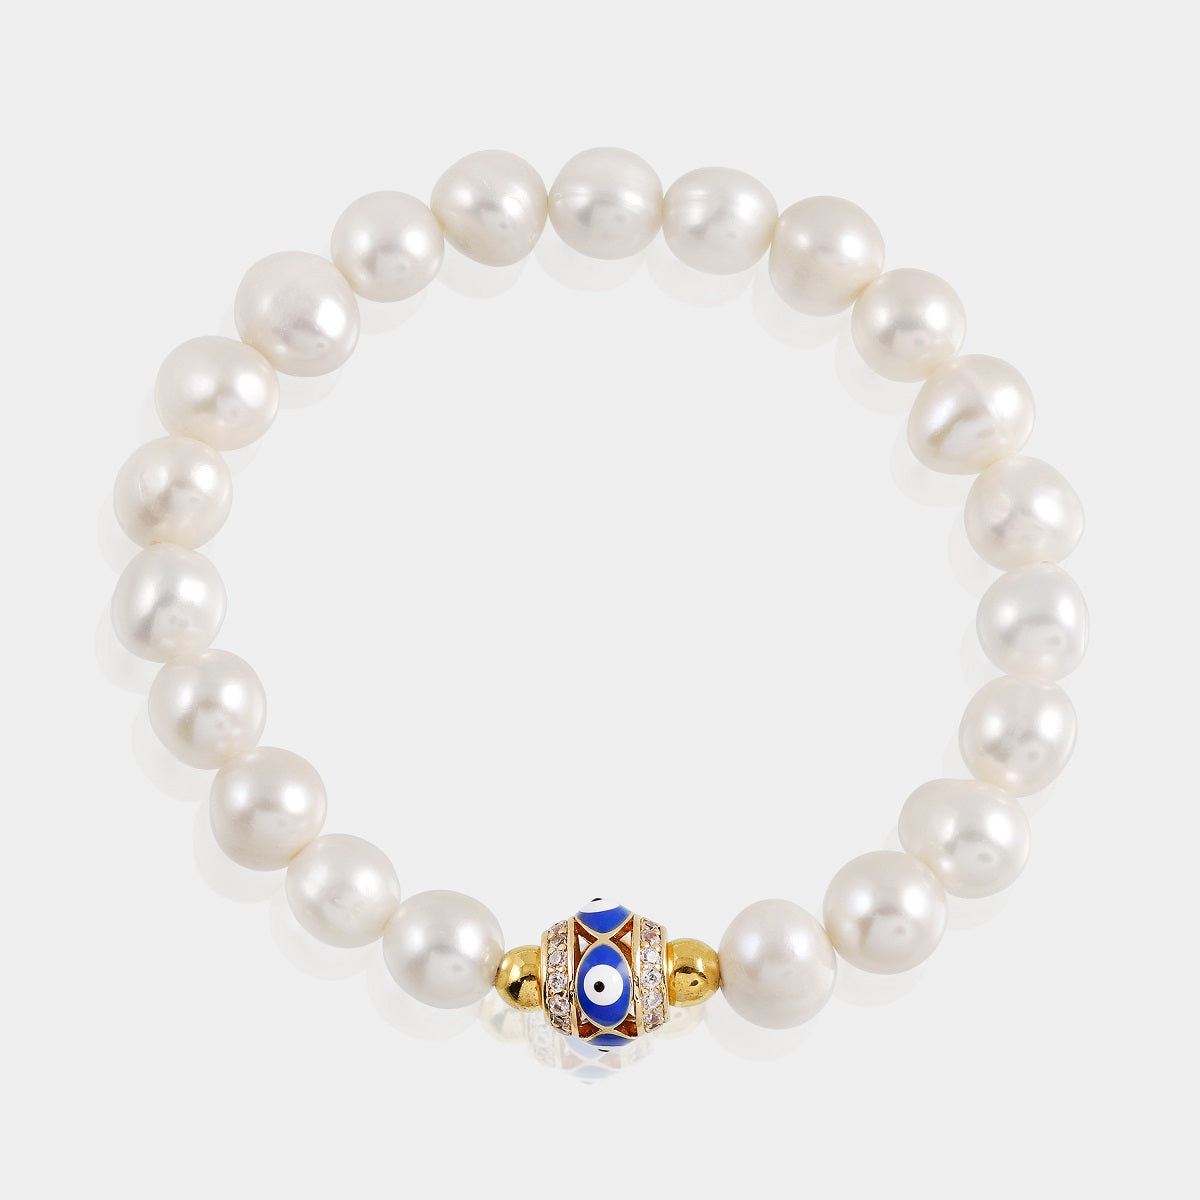 Smooth Potato-shaped Pearl Gemstone Beads